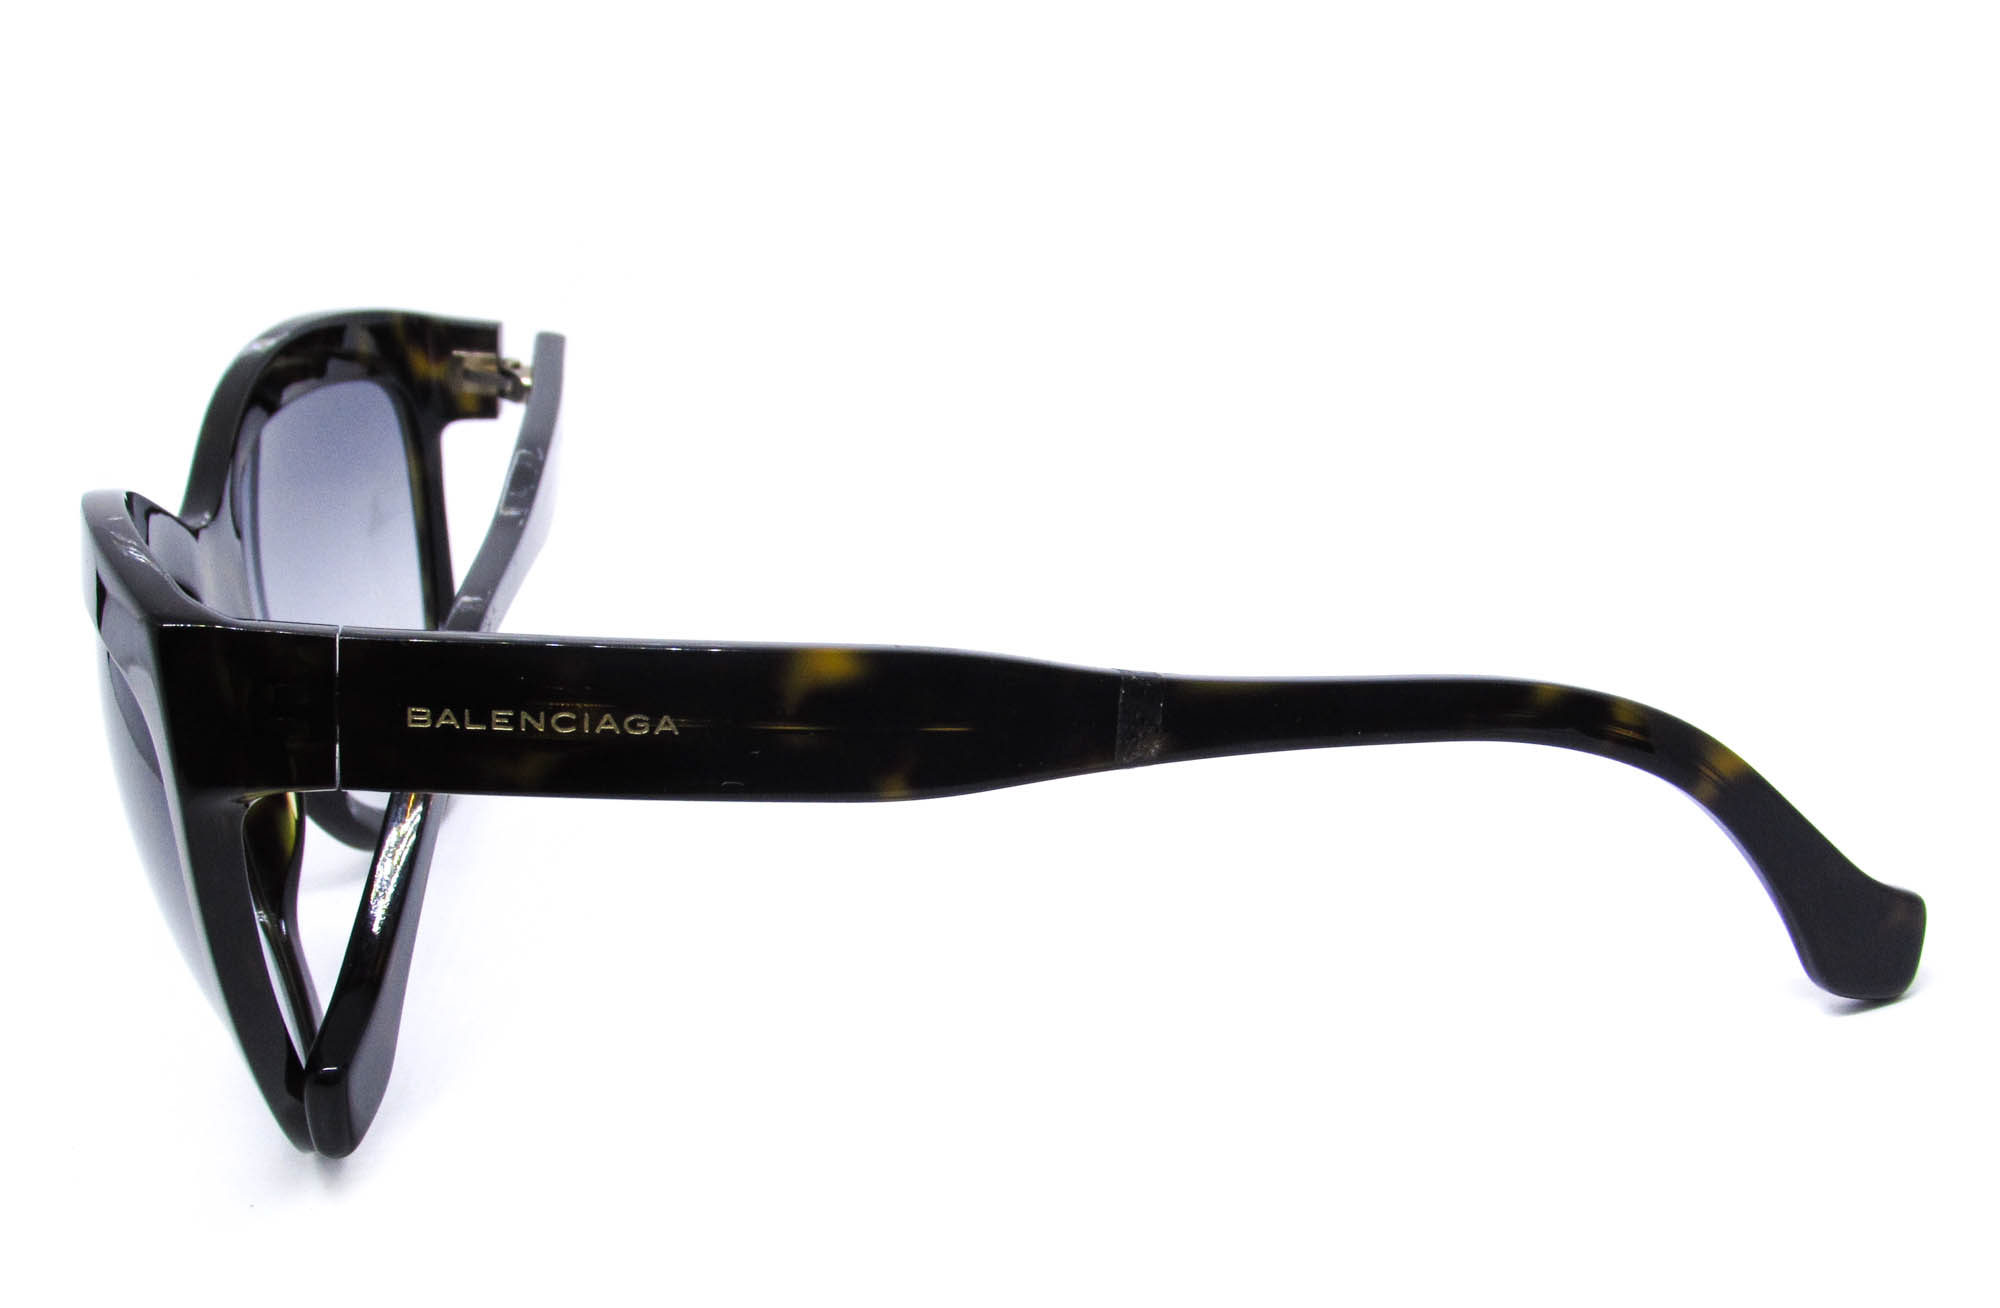 Óculos de Sol Balenciaga Feminino Gatinho Preto Mesclado